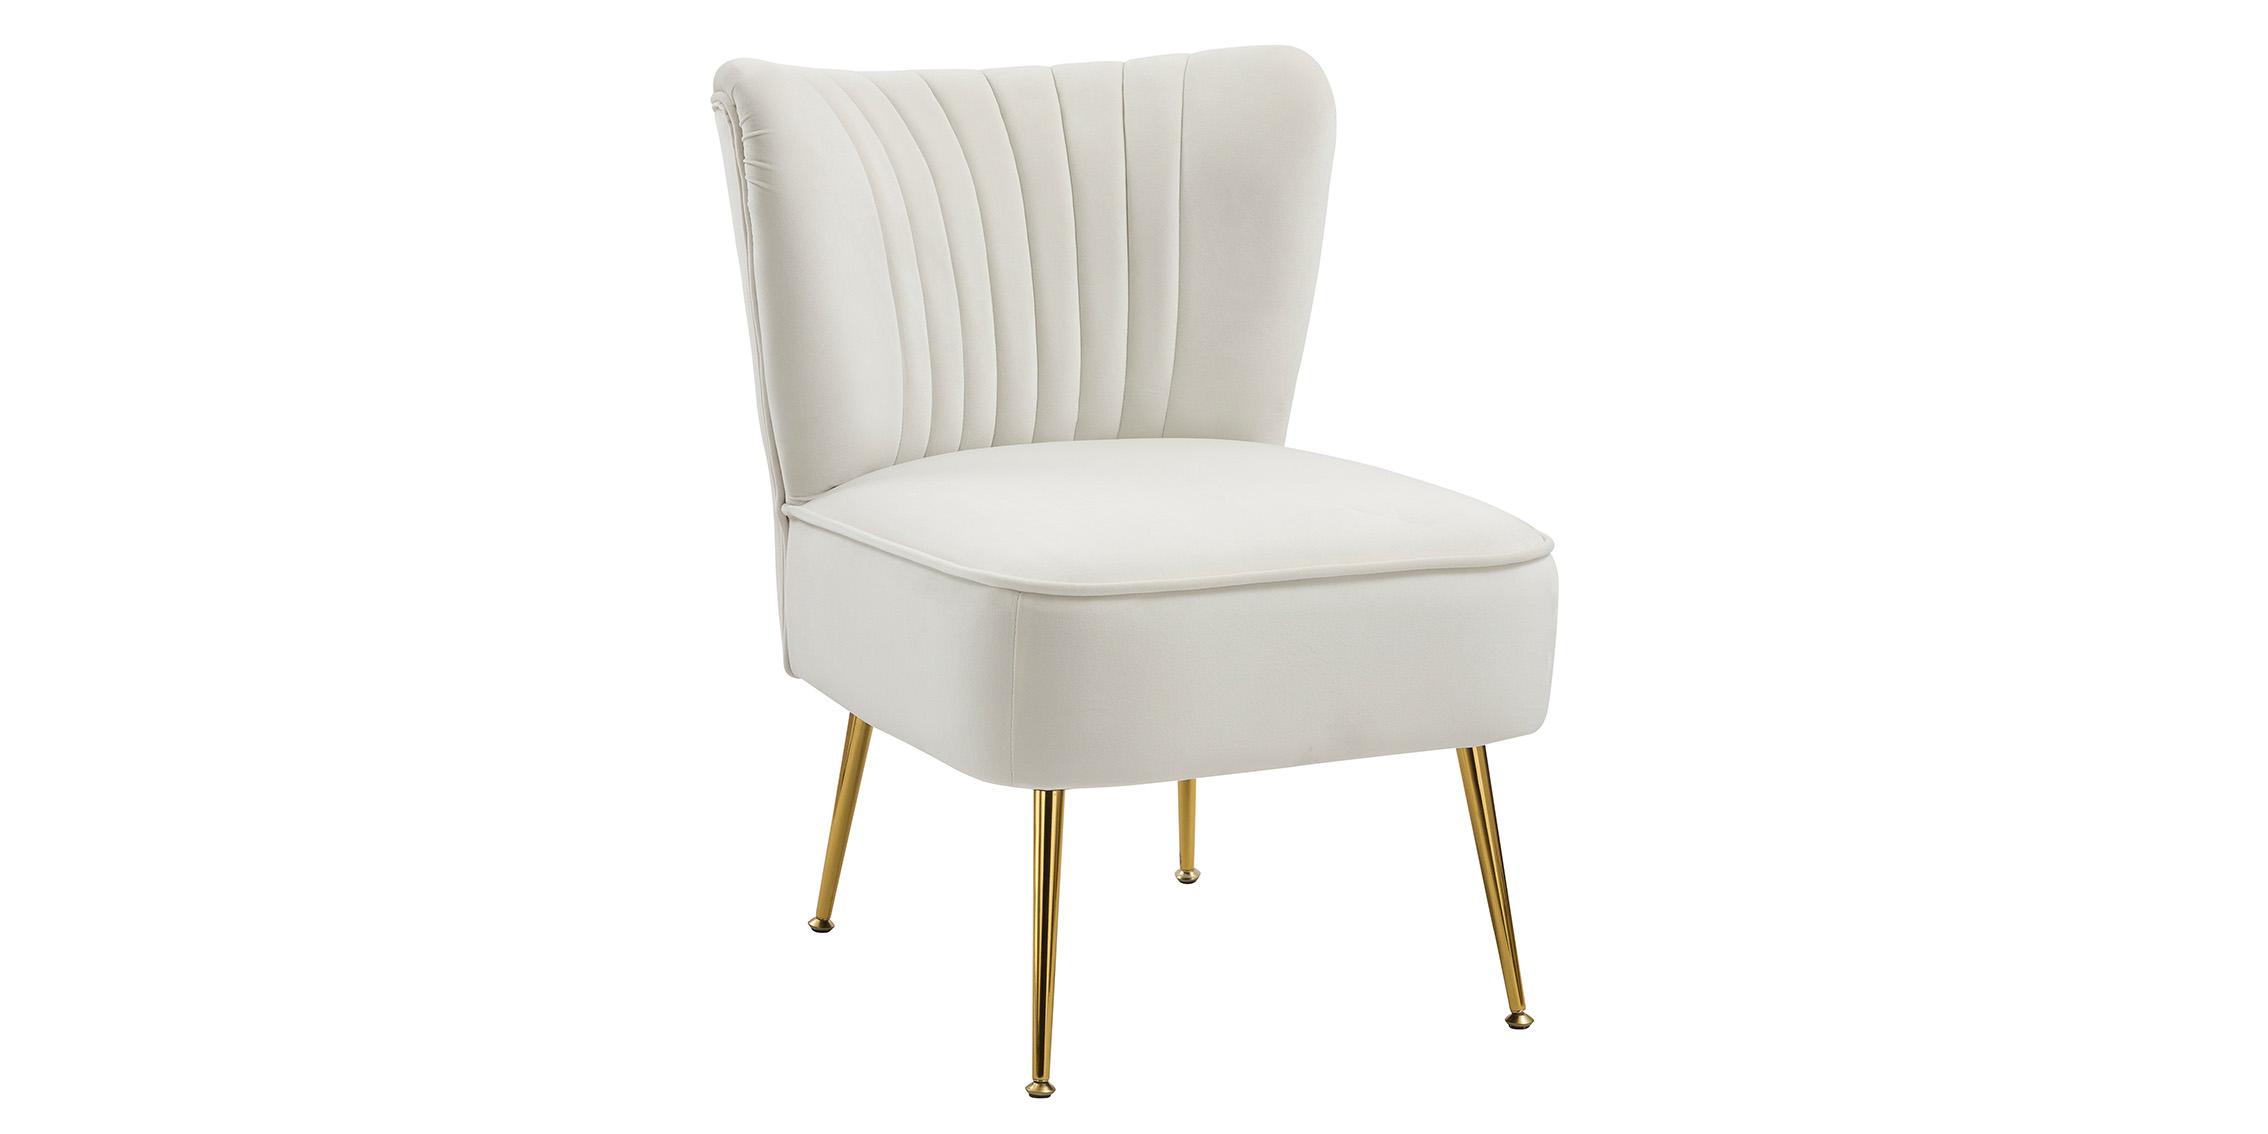 Contemporary, Modern Accent Chair TESS 504Cream 504Cream in Cream Velvet